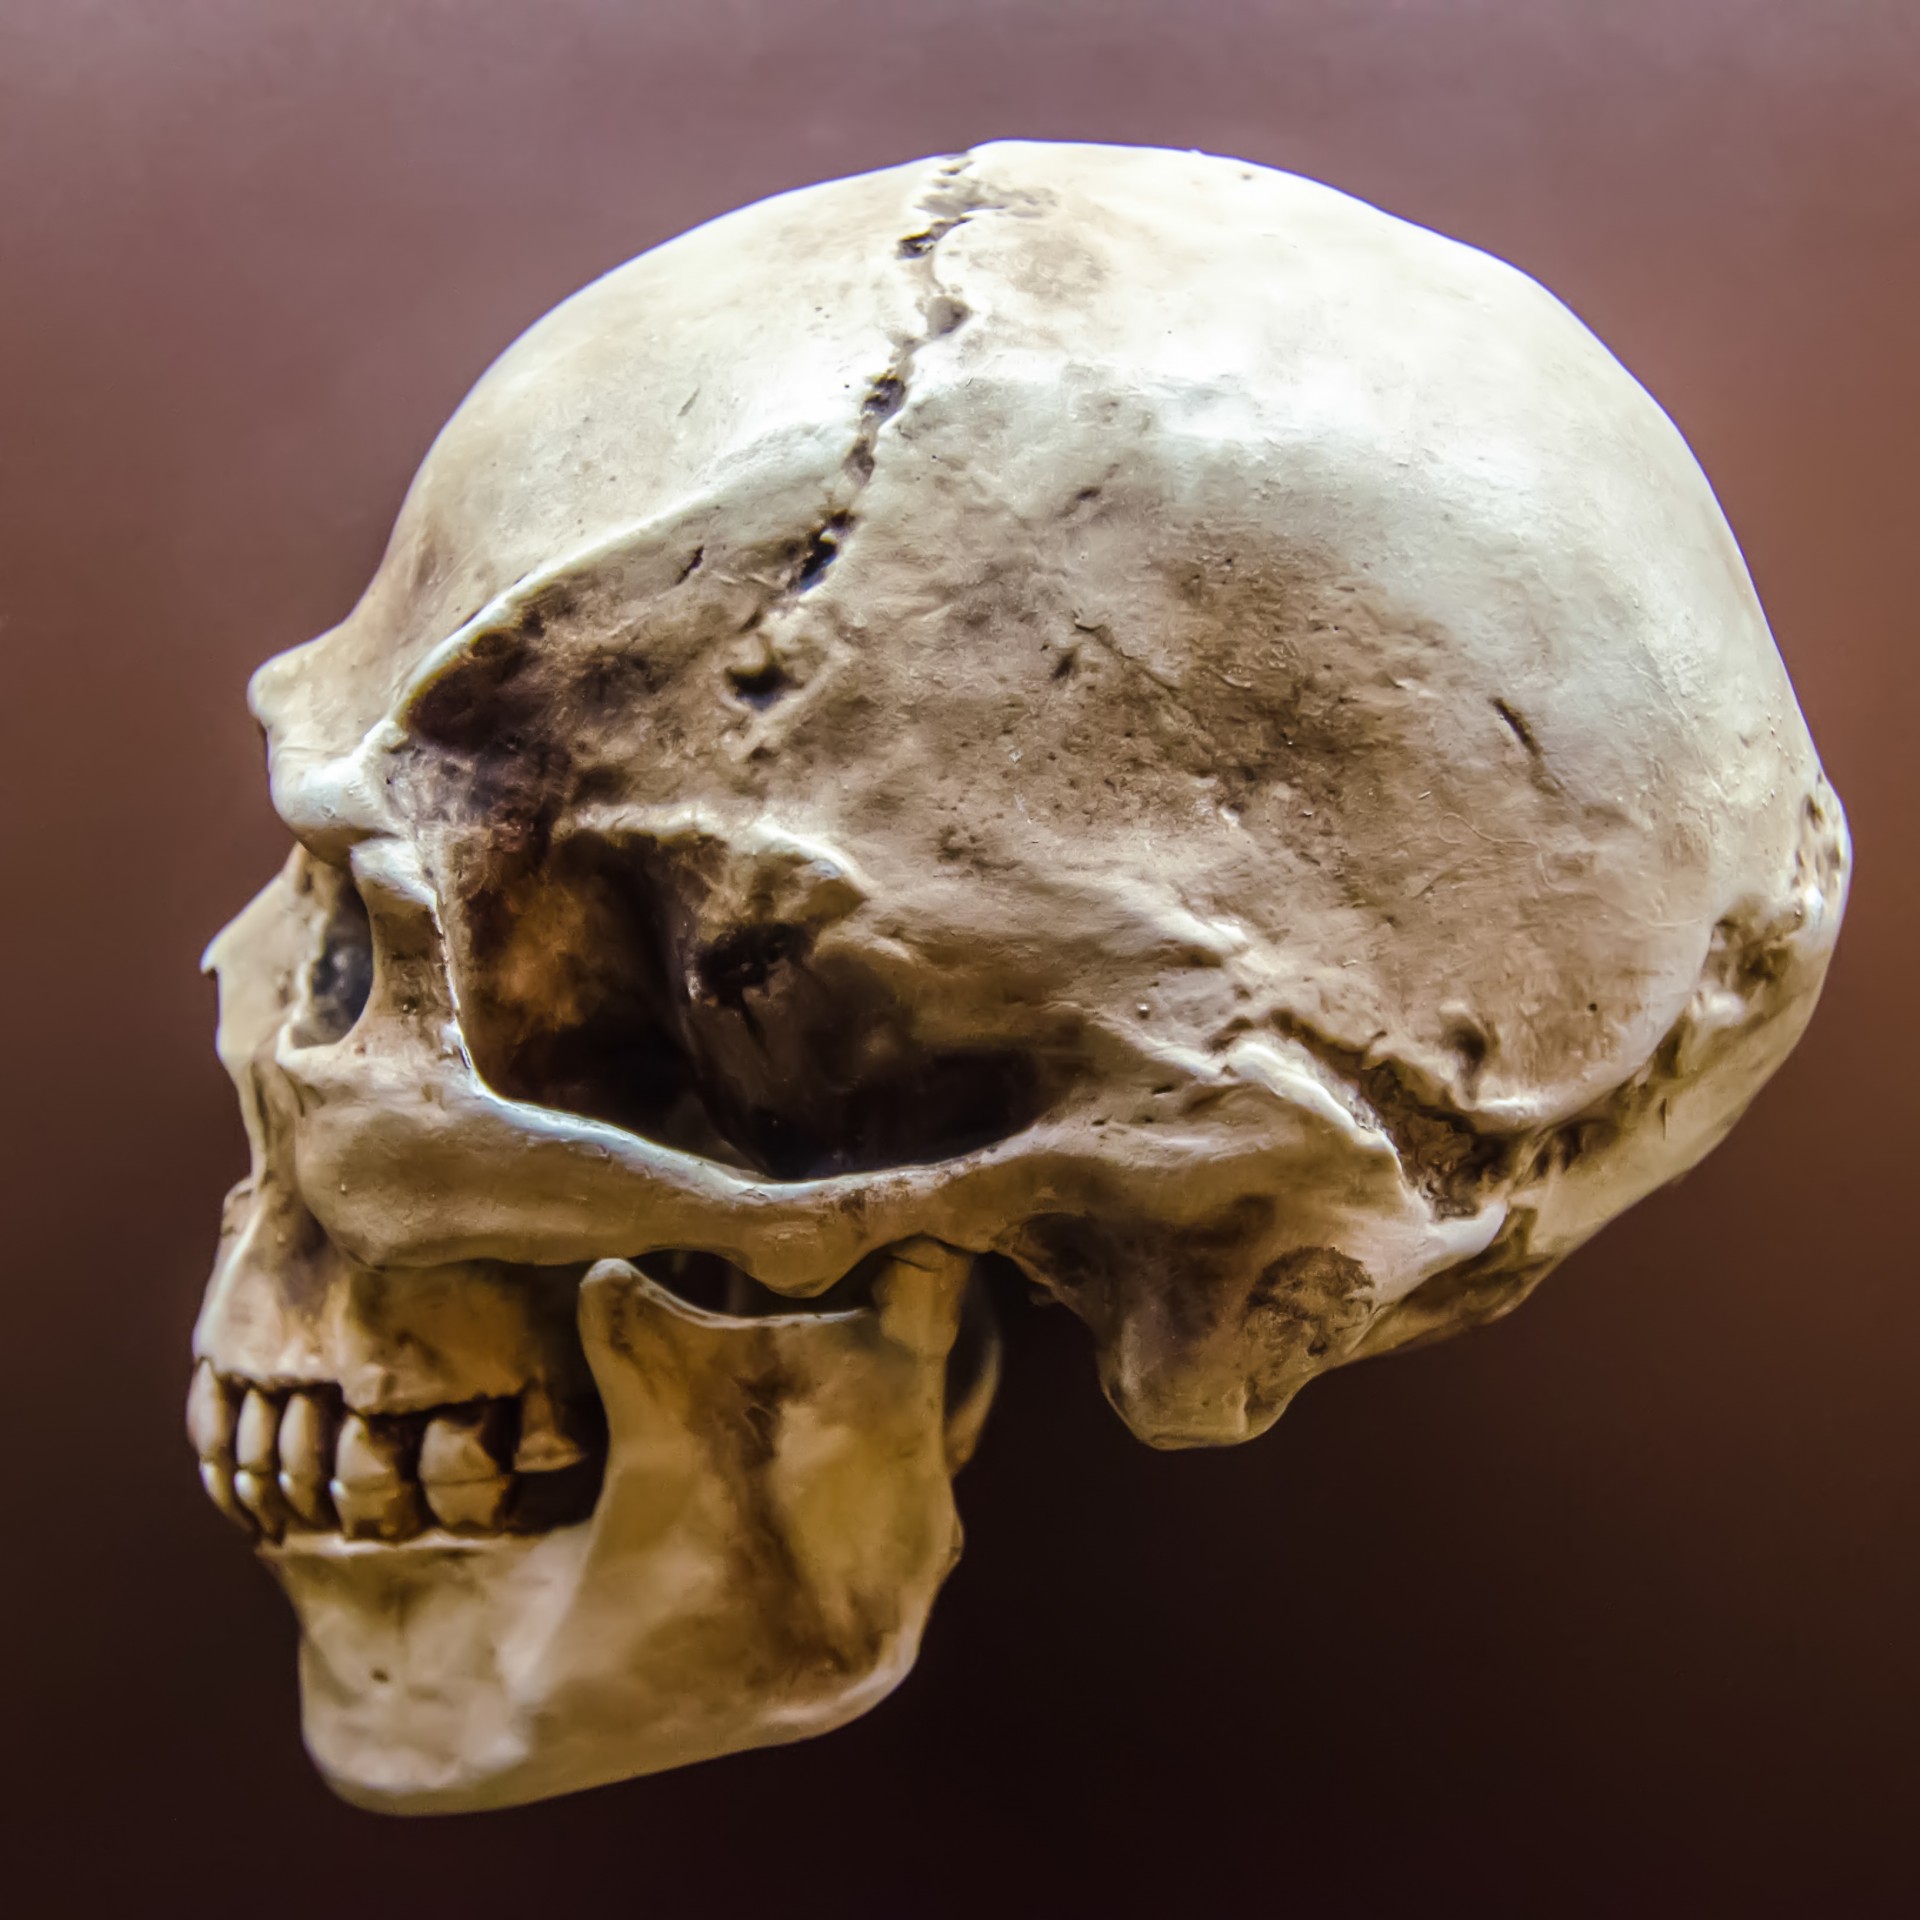 Human Skull On Display